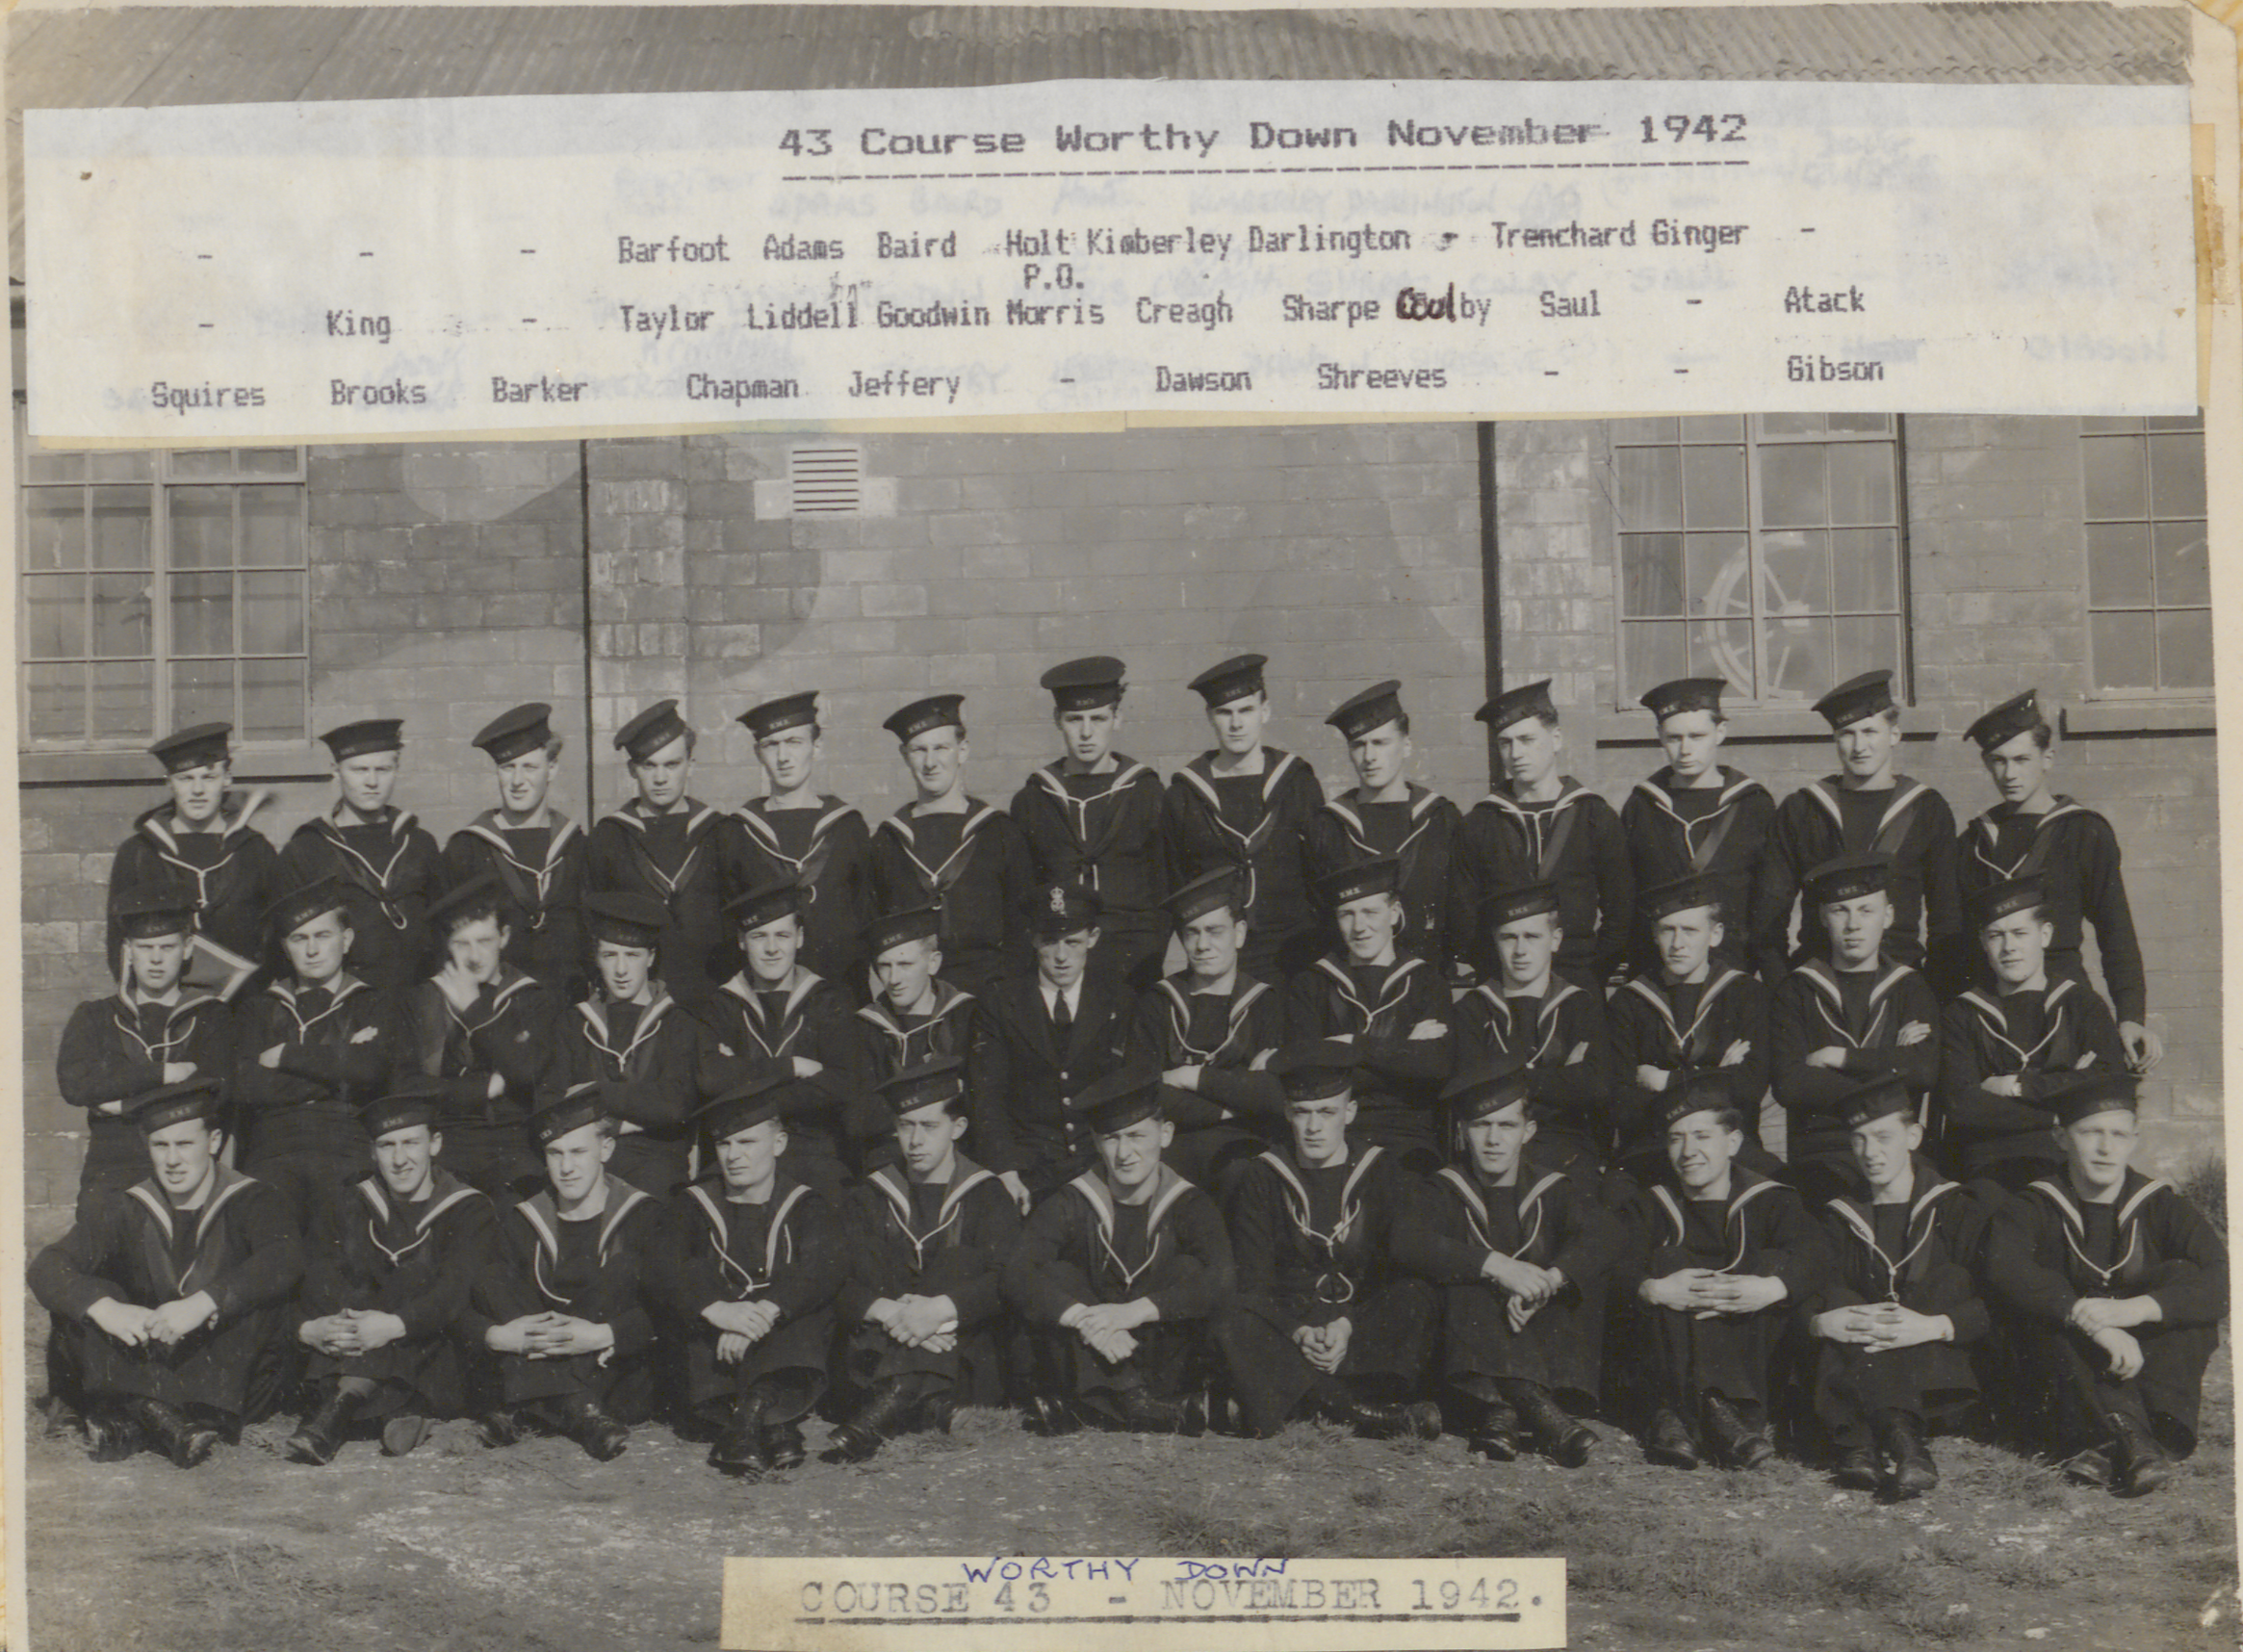 Arthur Kimberley course photo dated 1942